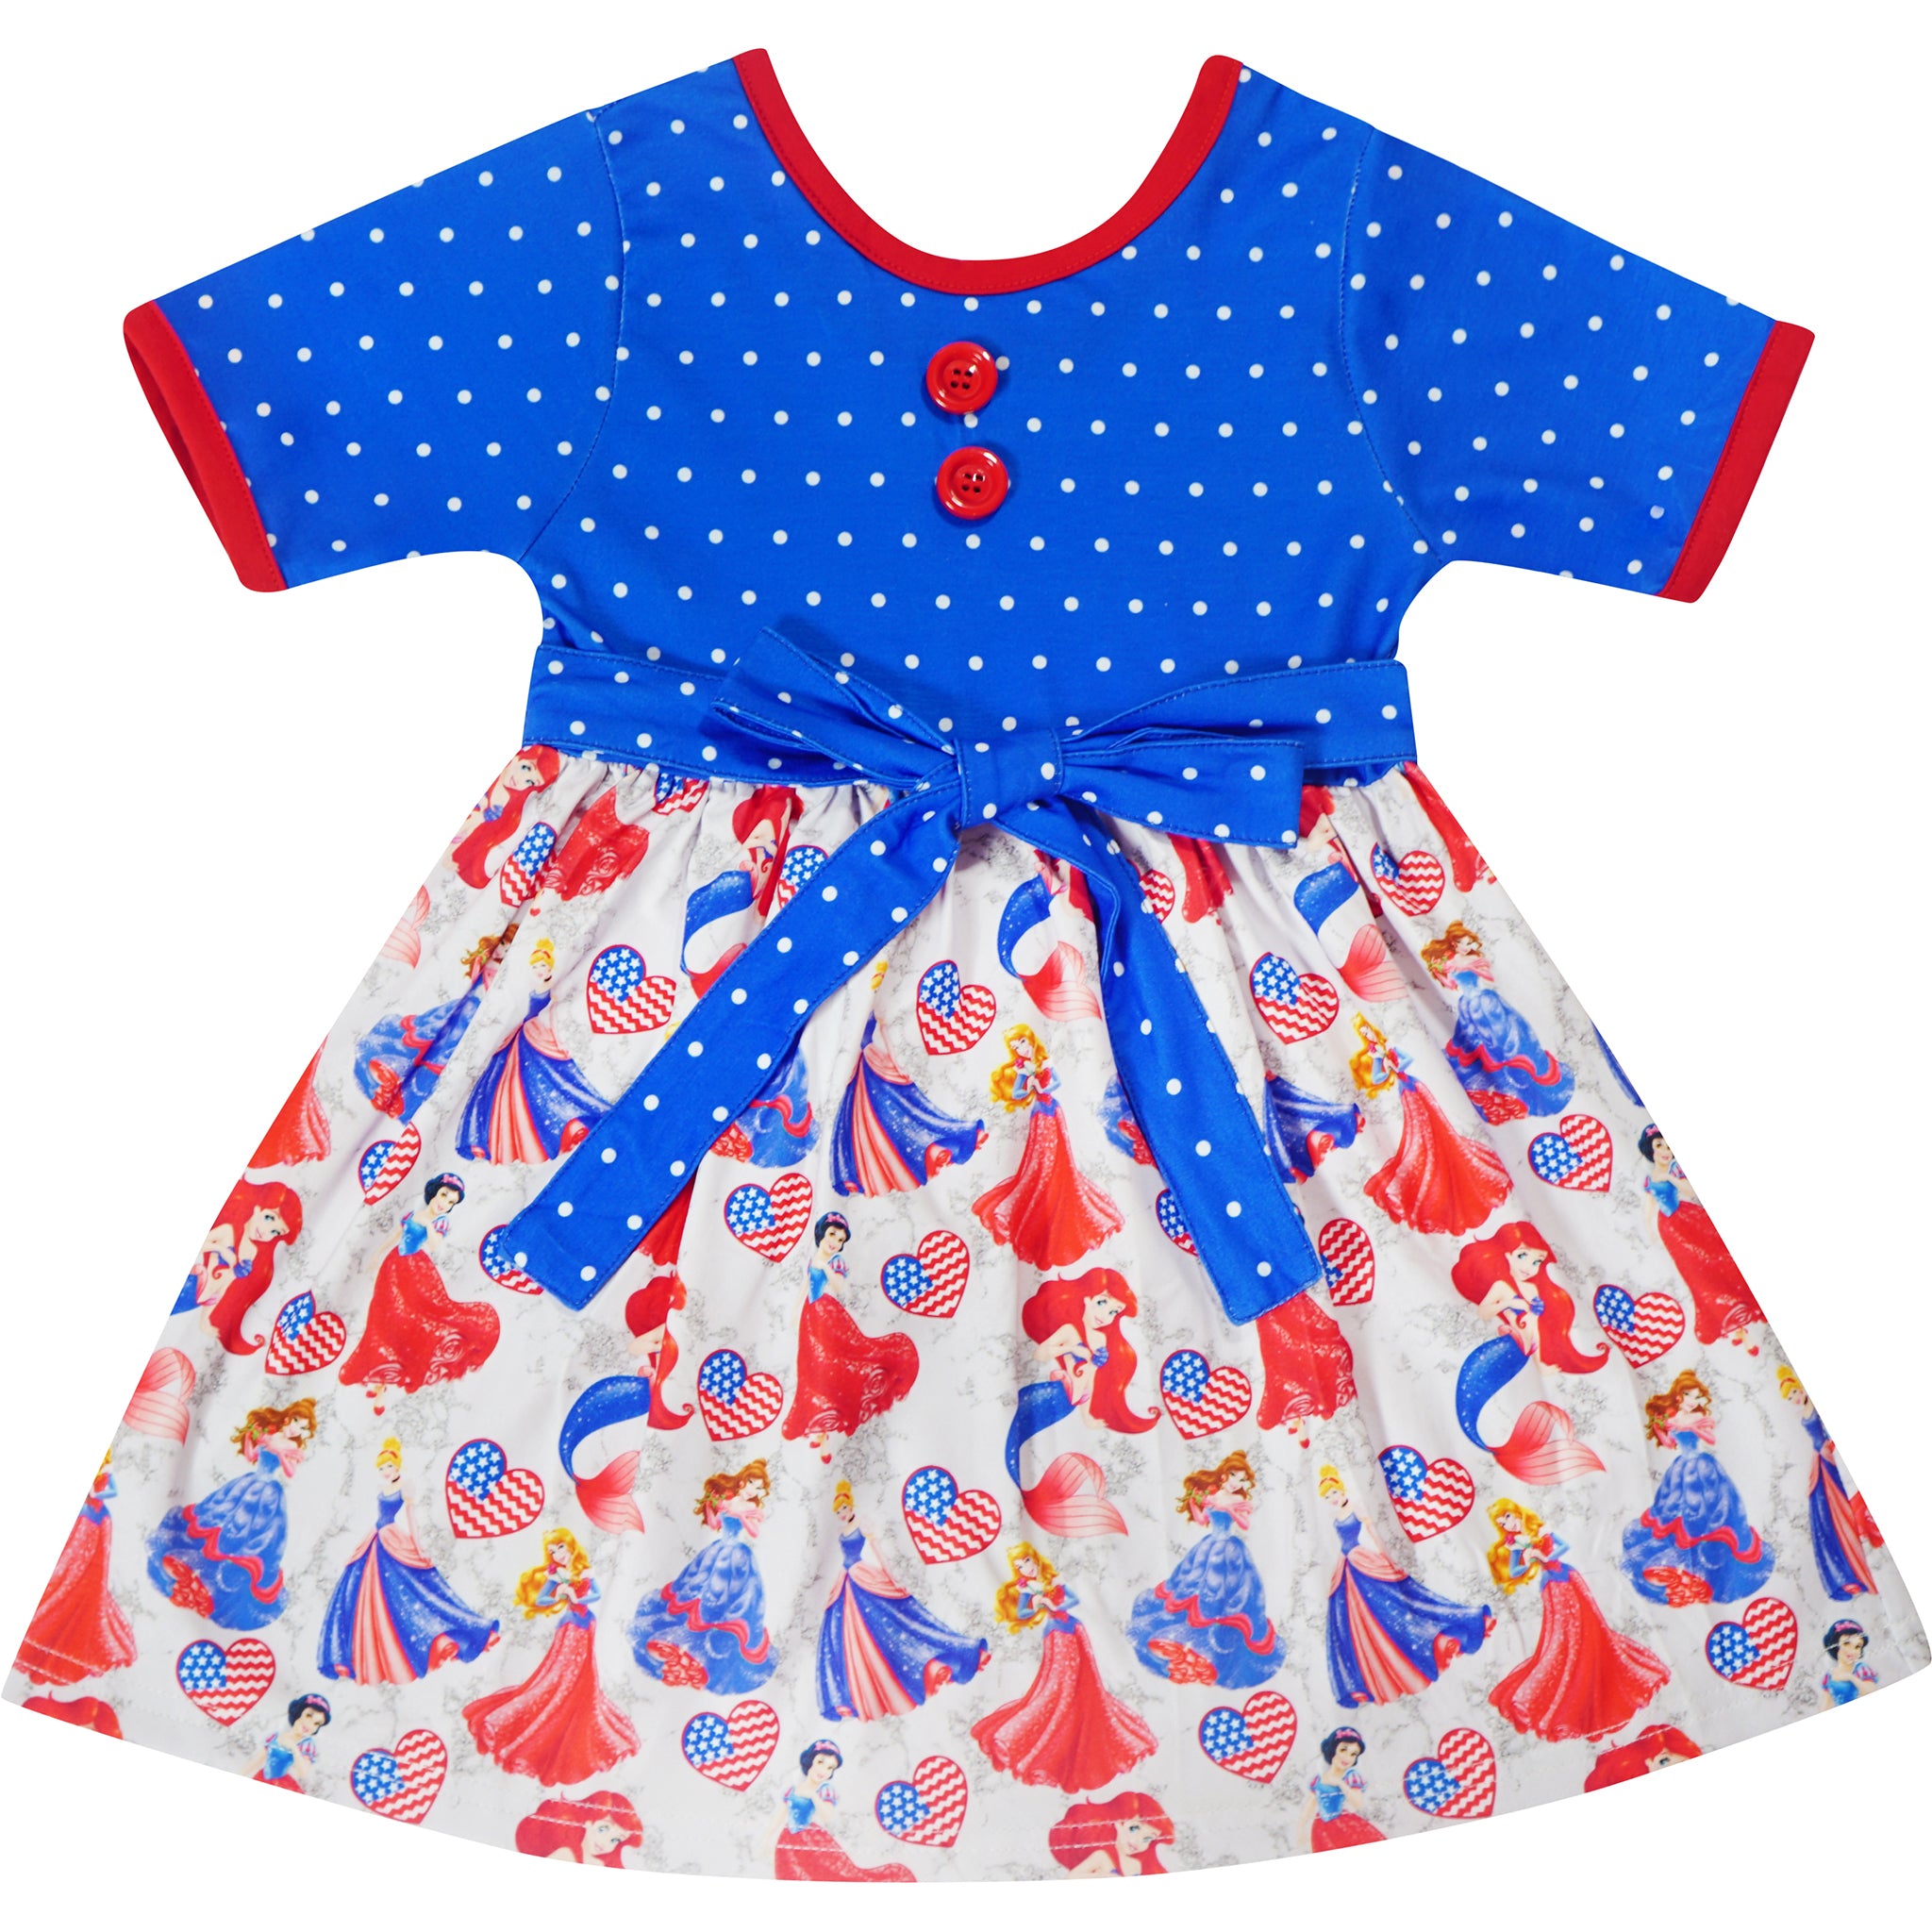 Baby Toddler Girls Disney Inspired Princess 4th July Independence Day Patriotic Dress Blue Polka Dot - Angeline Kids